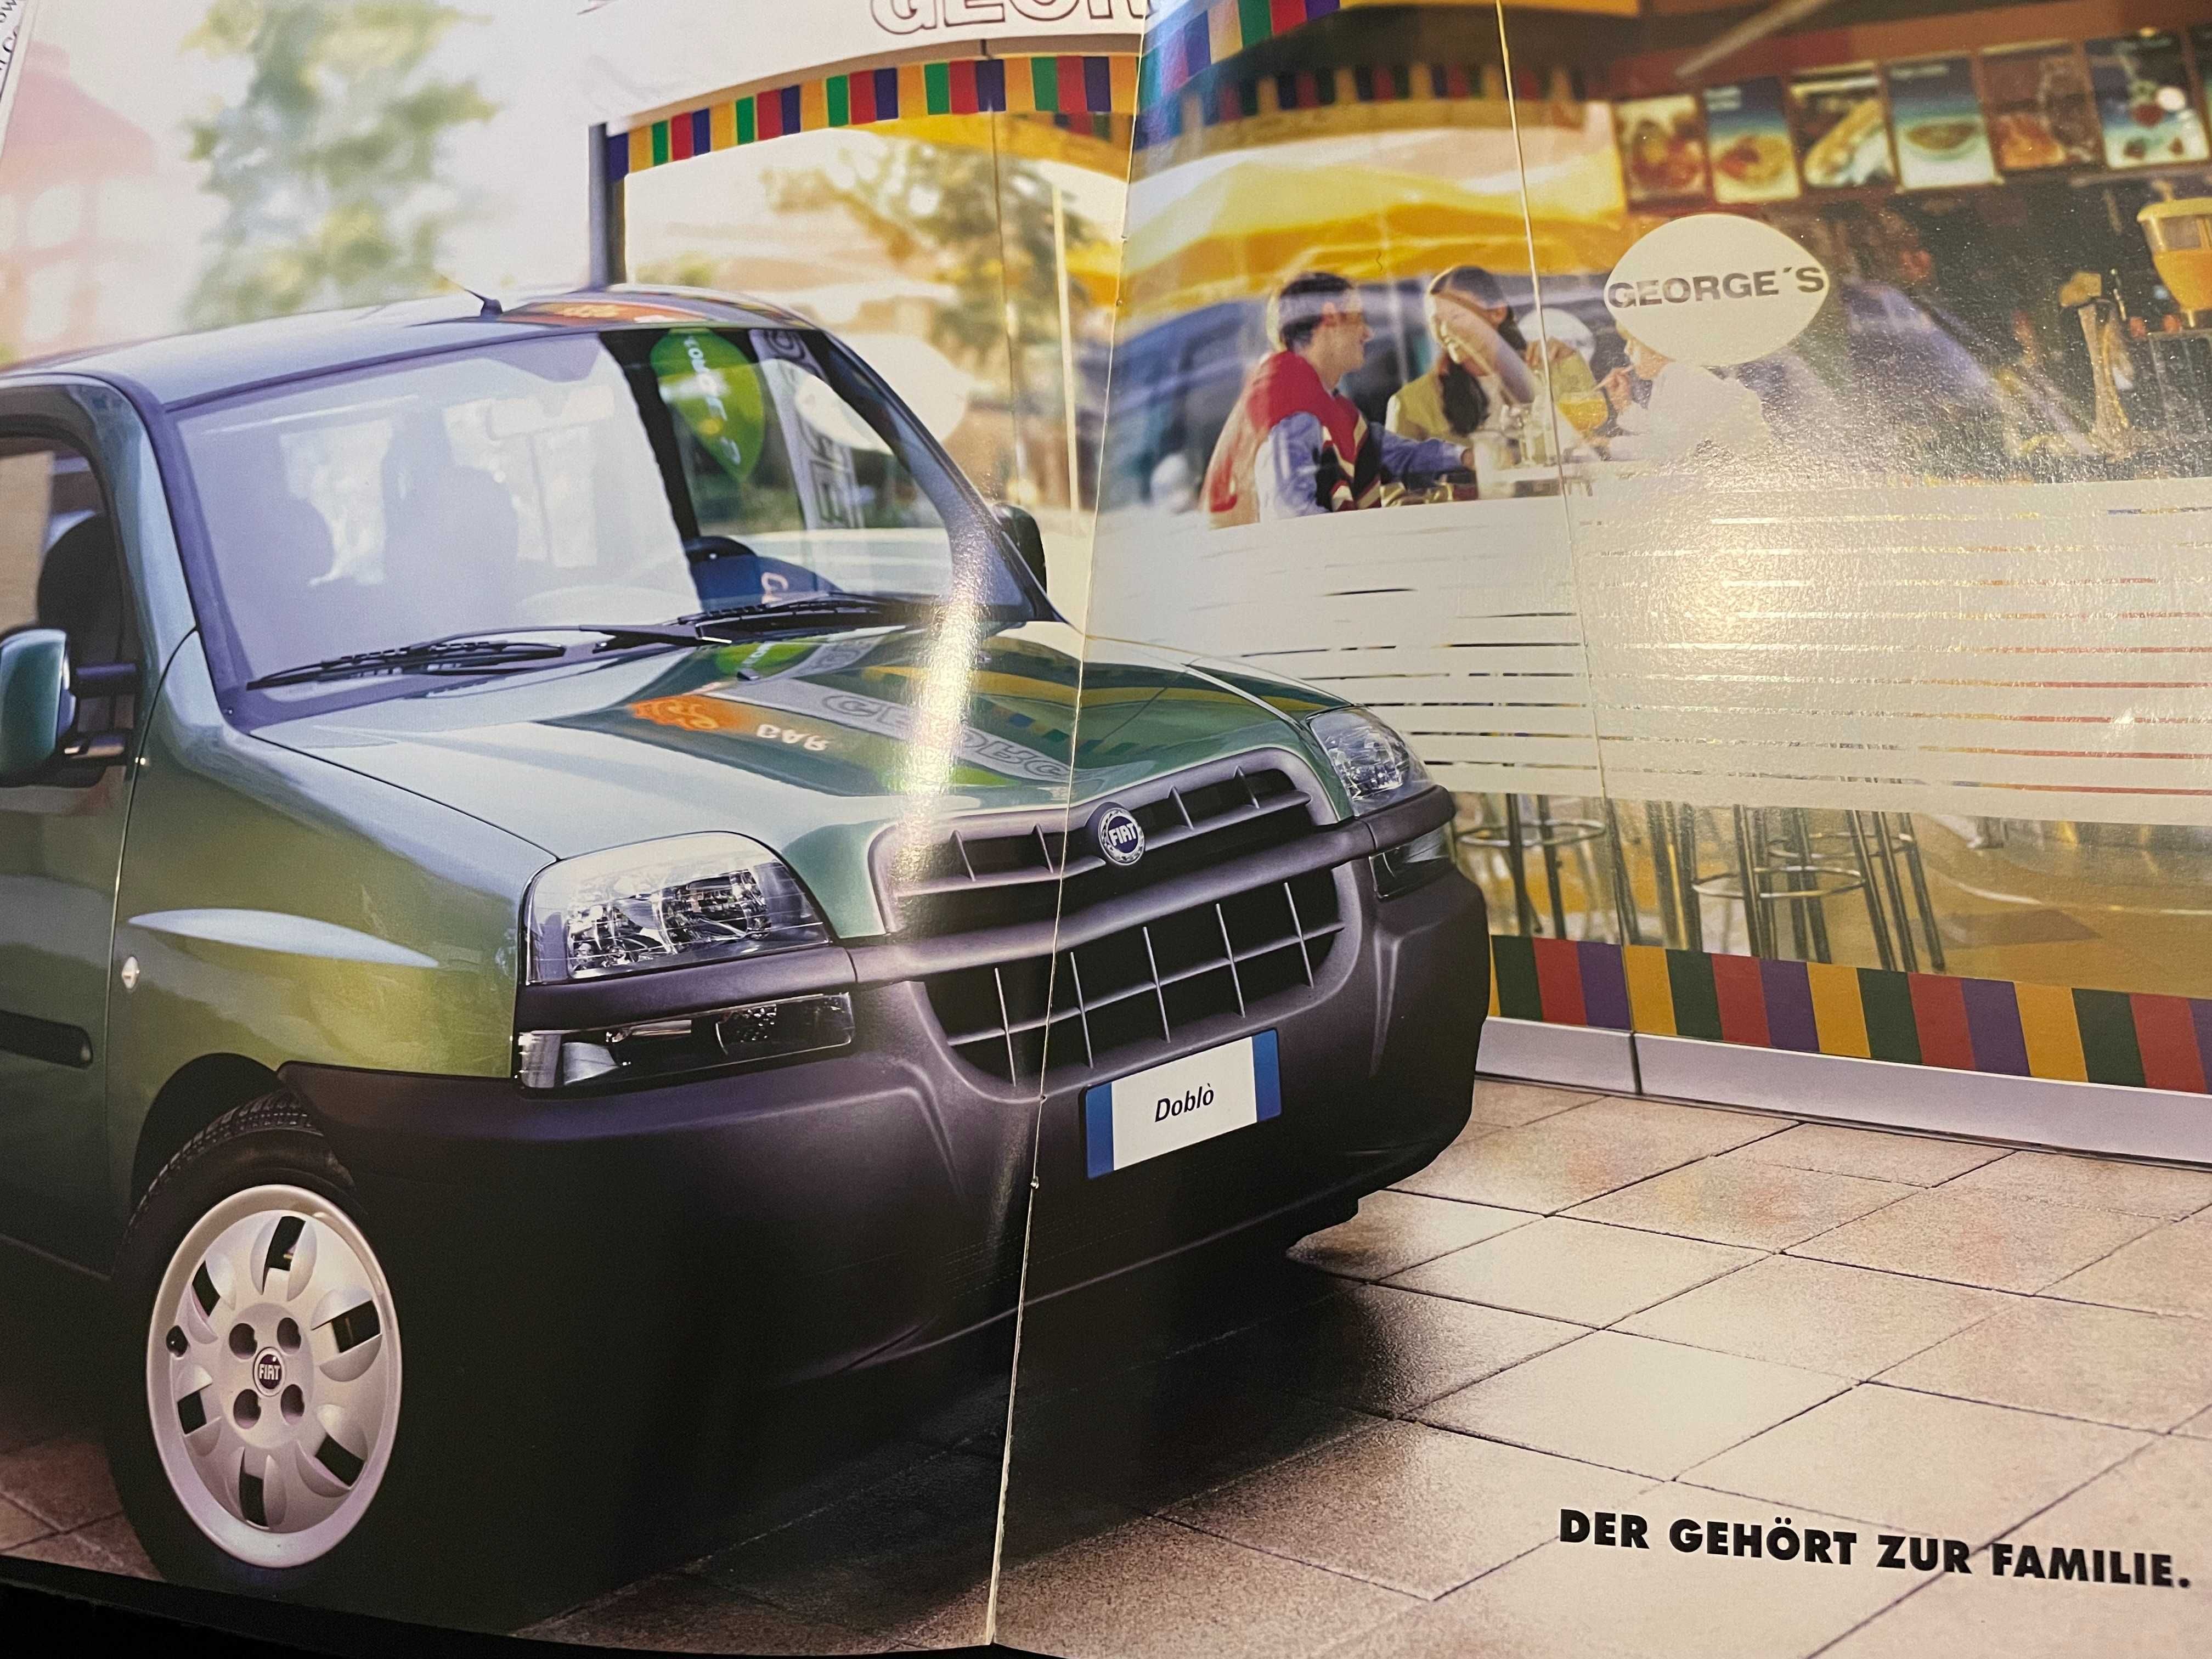 Katalog prospekt Fiat Doblo 2001 r. 24 strony